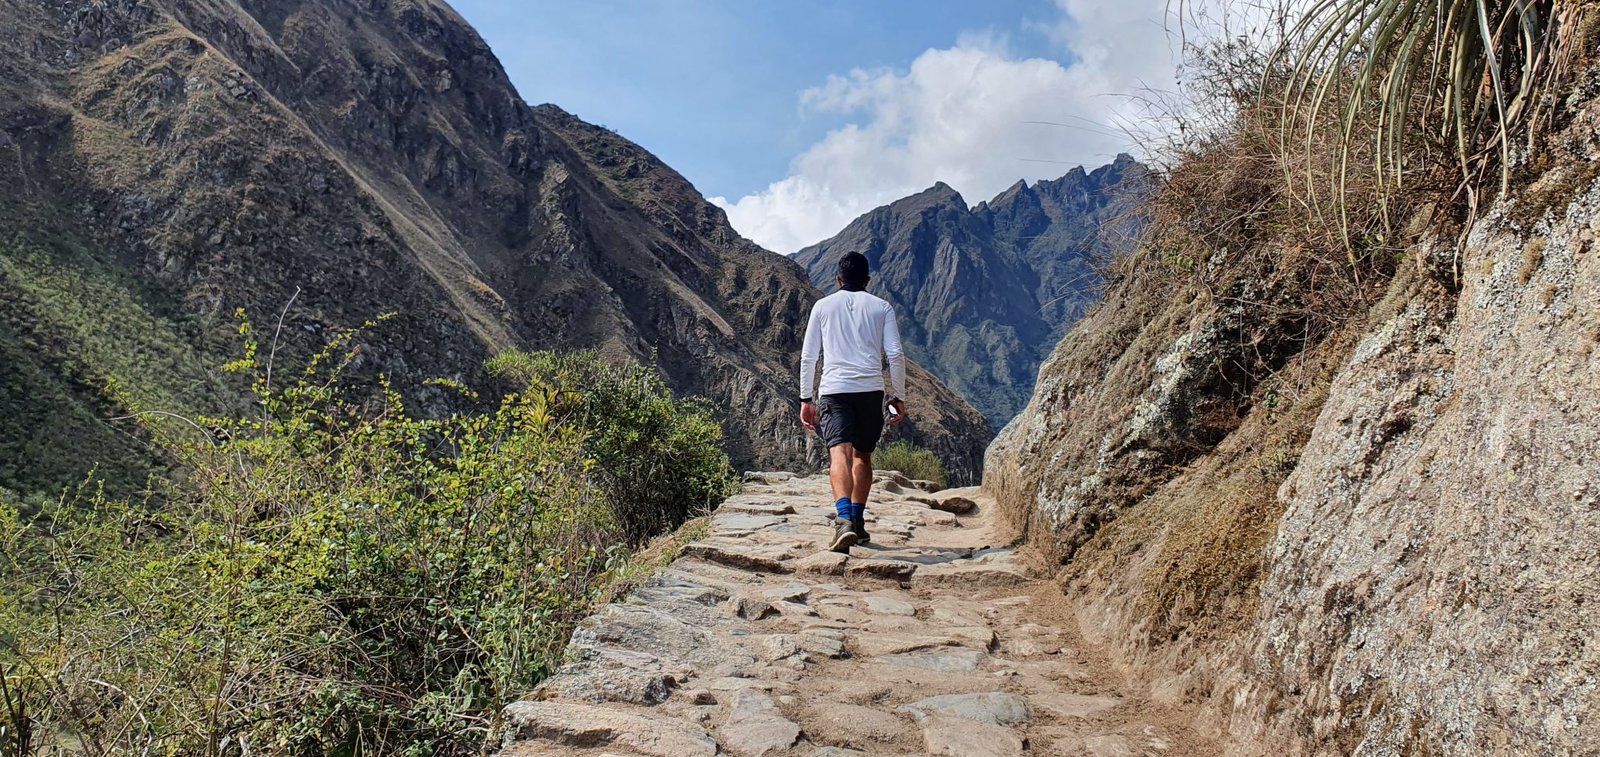 Inca Trail to Machu Picchu 1 dayPhoto #3 